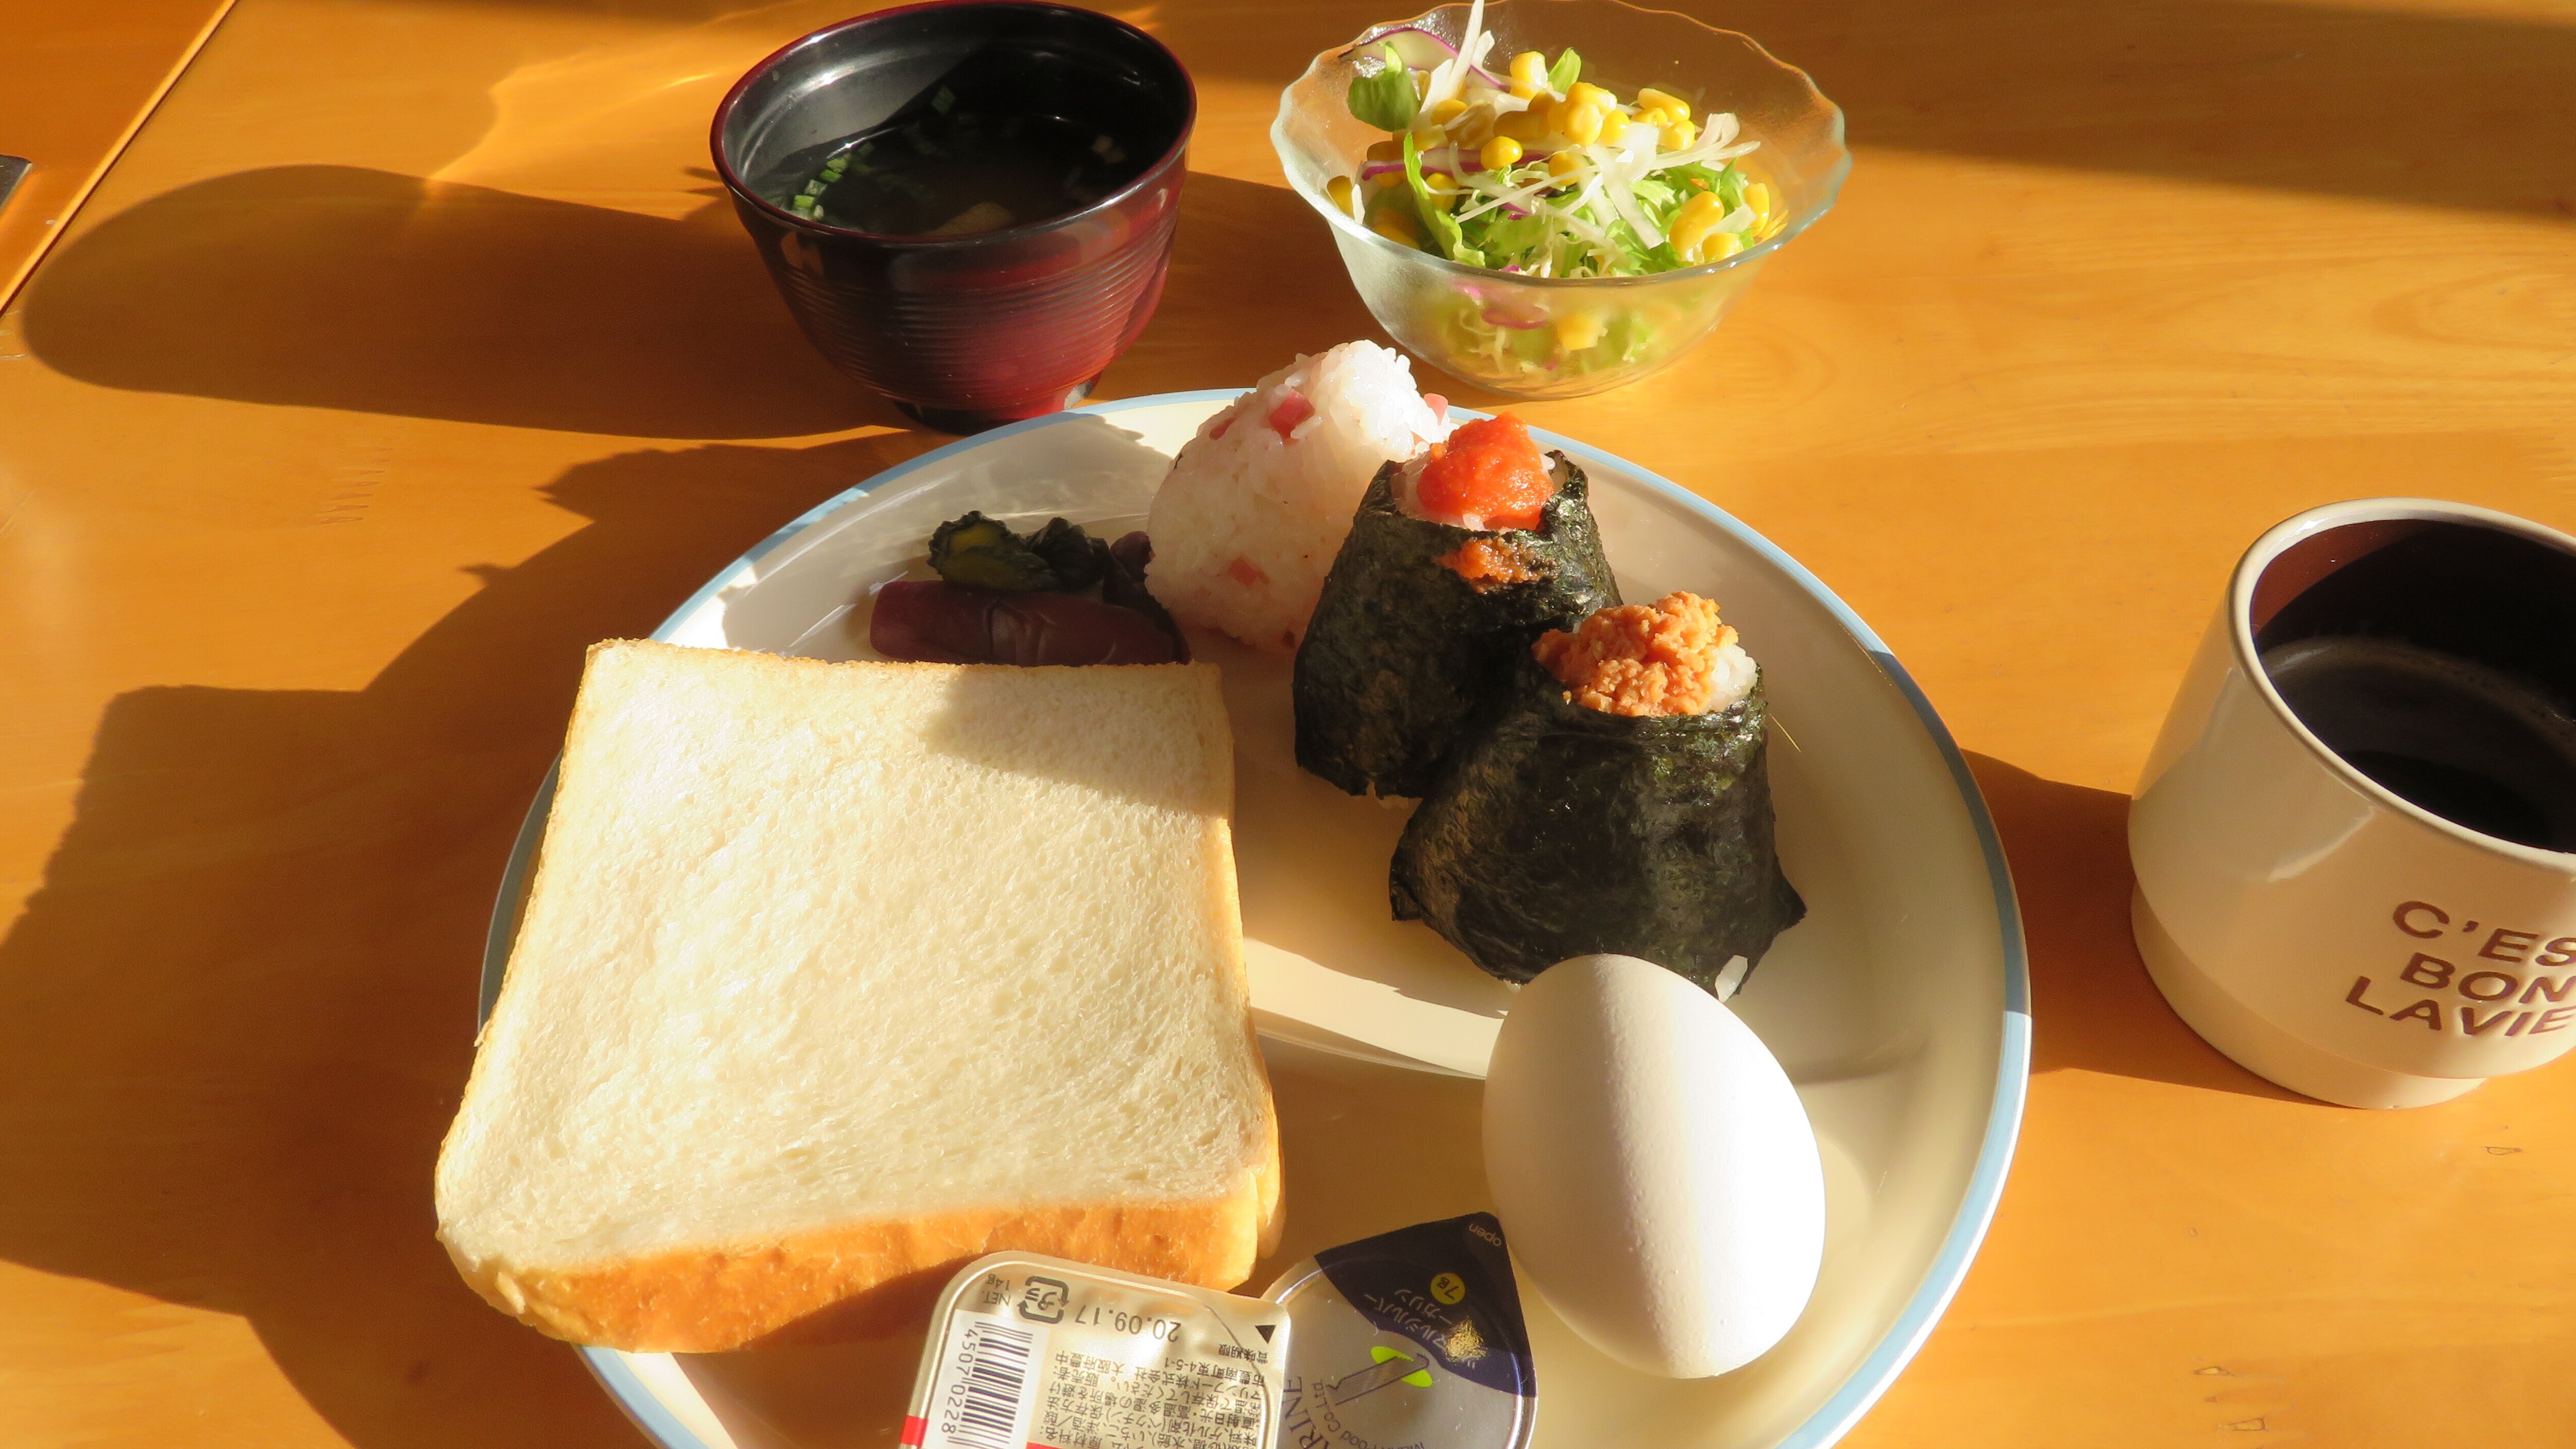 [Free light breakfast] Arrangement example Rice balls, coffee, miso soup, salad, boiled eggs, etc.